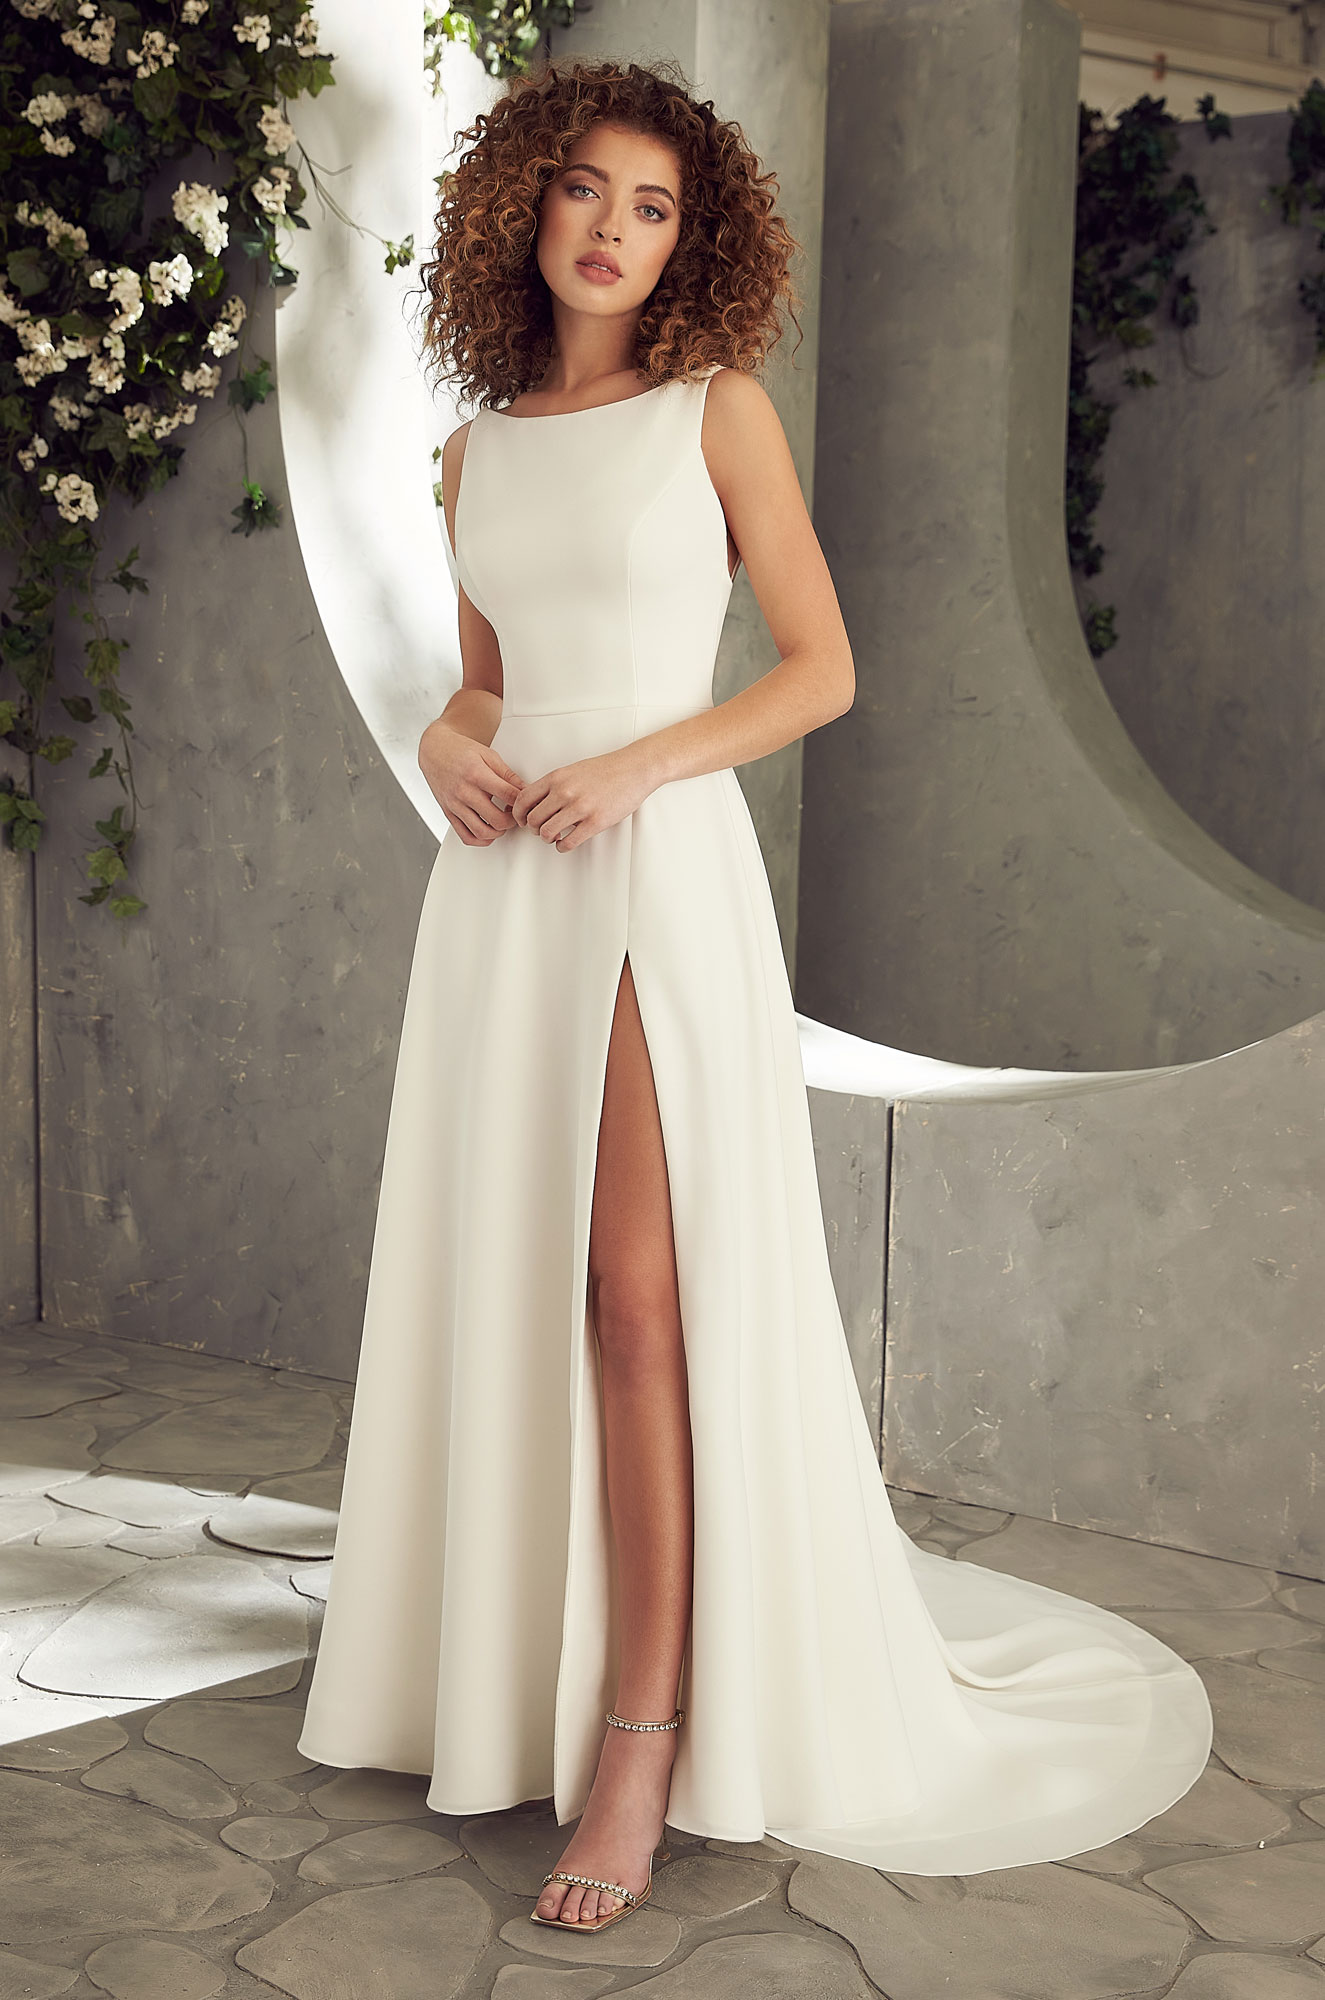 11 sophisticated, minimalist wedding dresses from Mikaella